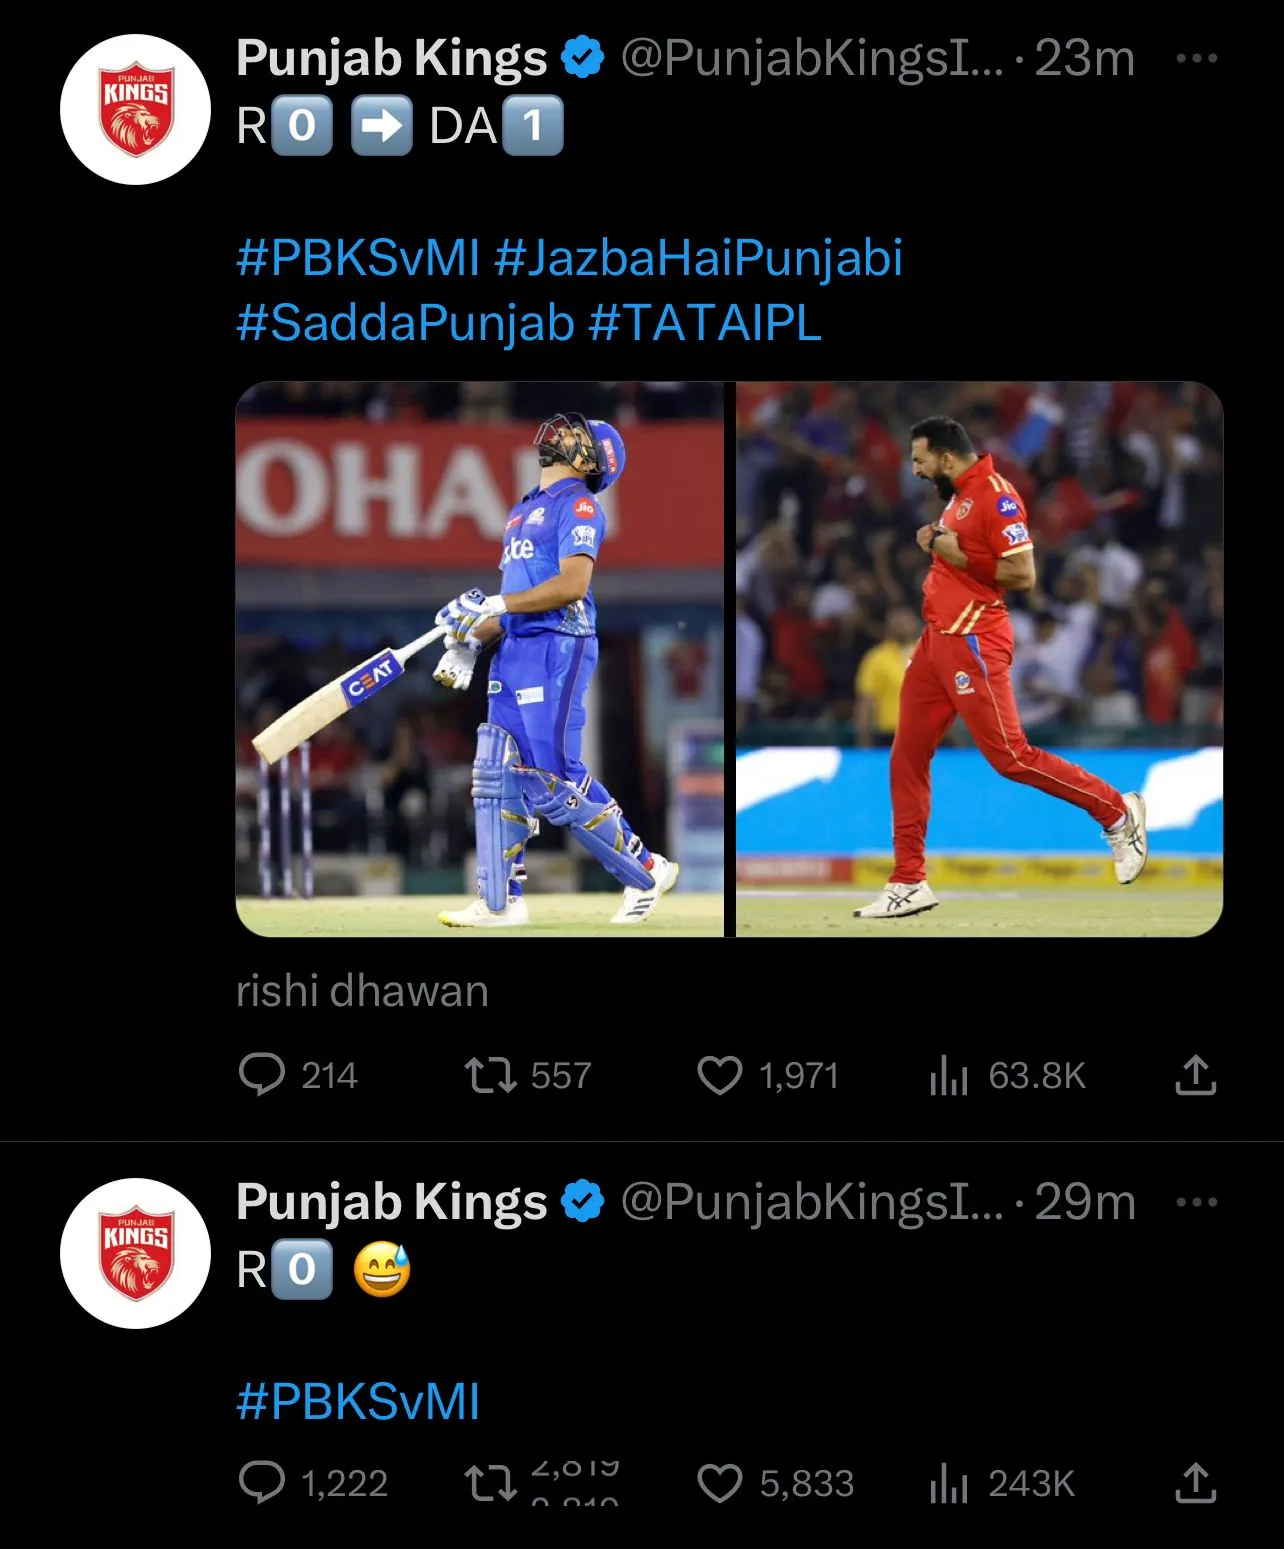 PBKS' now deleted 'R0' tweet mocking Rohit Sharma